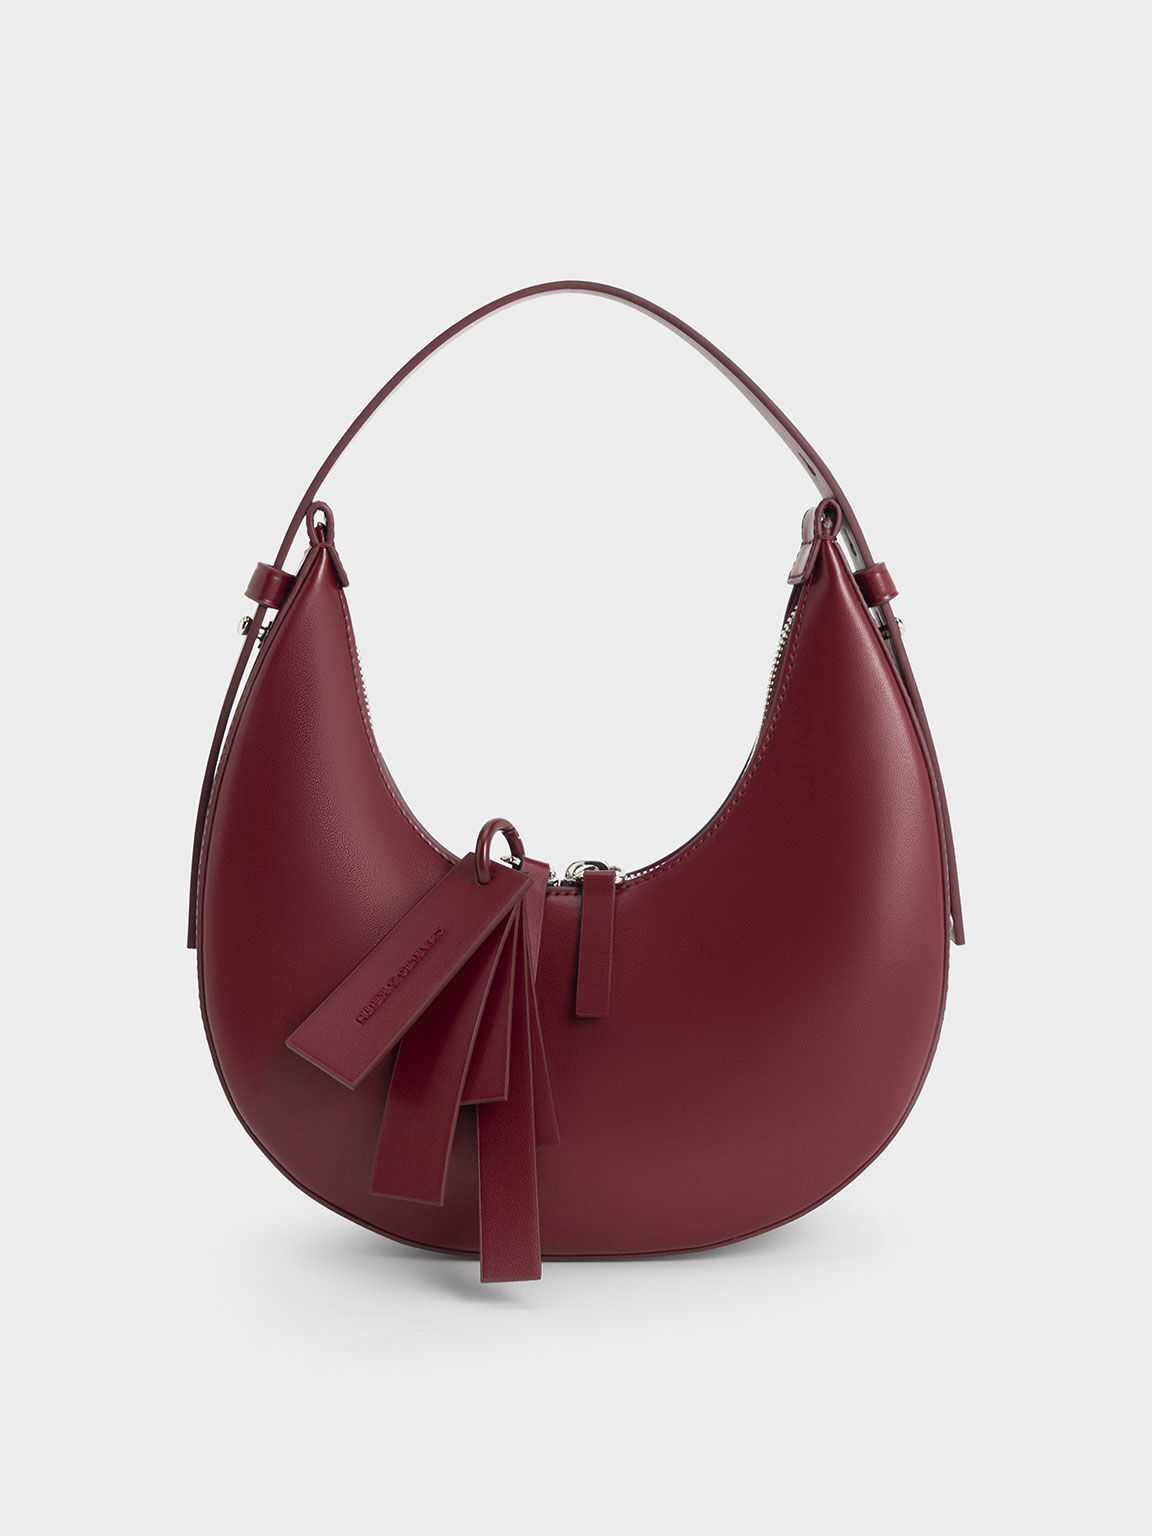 Dark Red Leather Bag w/ Tassel, Fashion Purse, Everyday Handbag, Anabella -  Fgalaze Genuine Leather Bags & Accessories